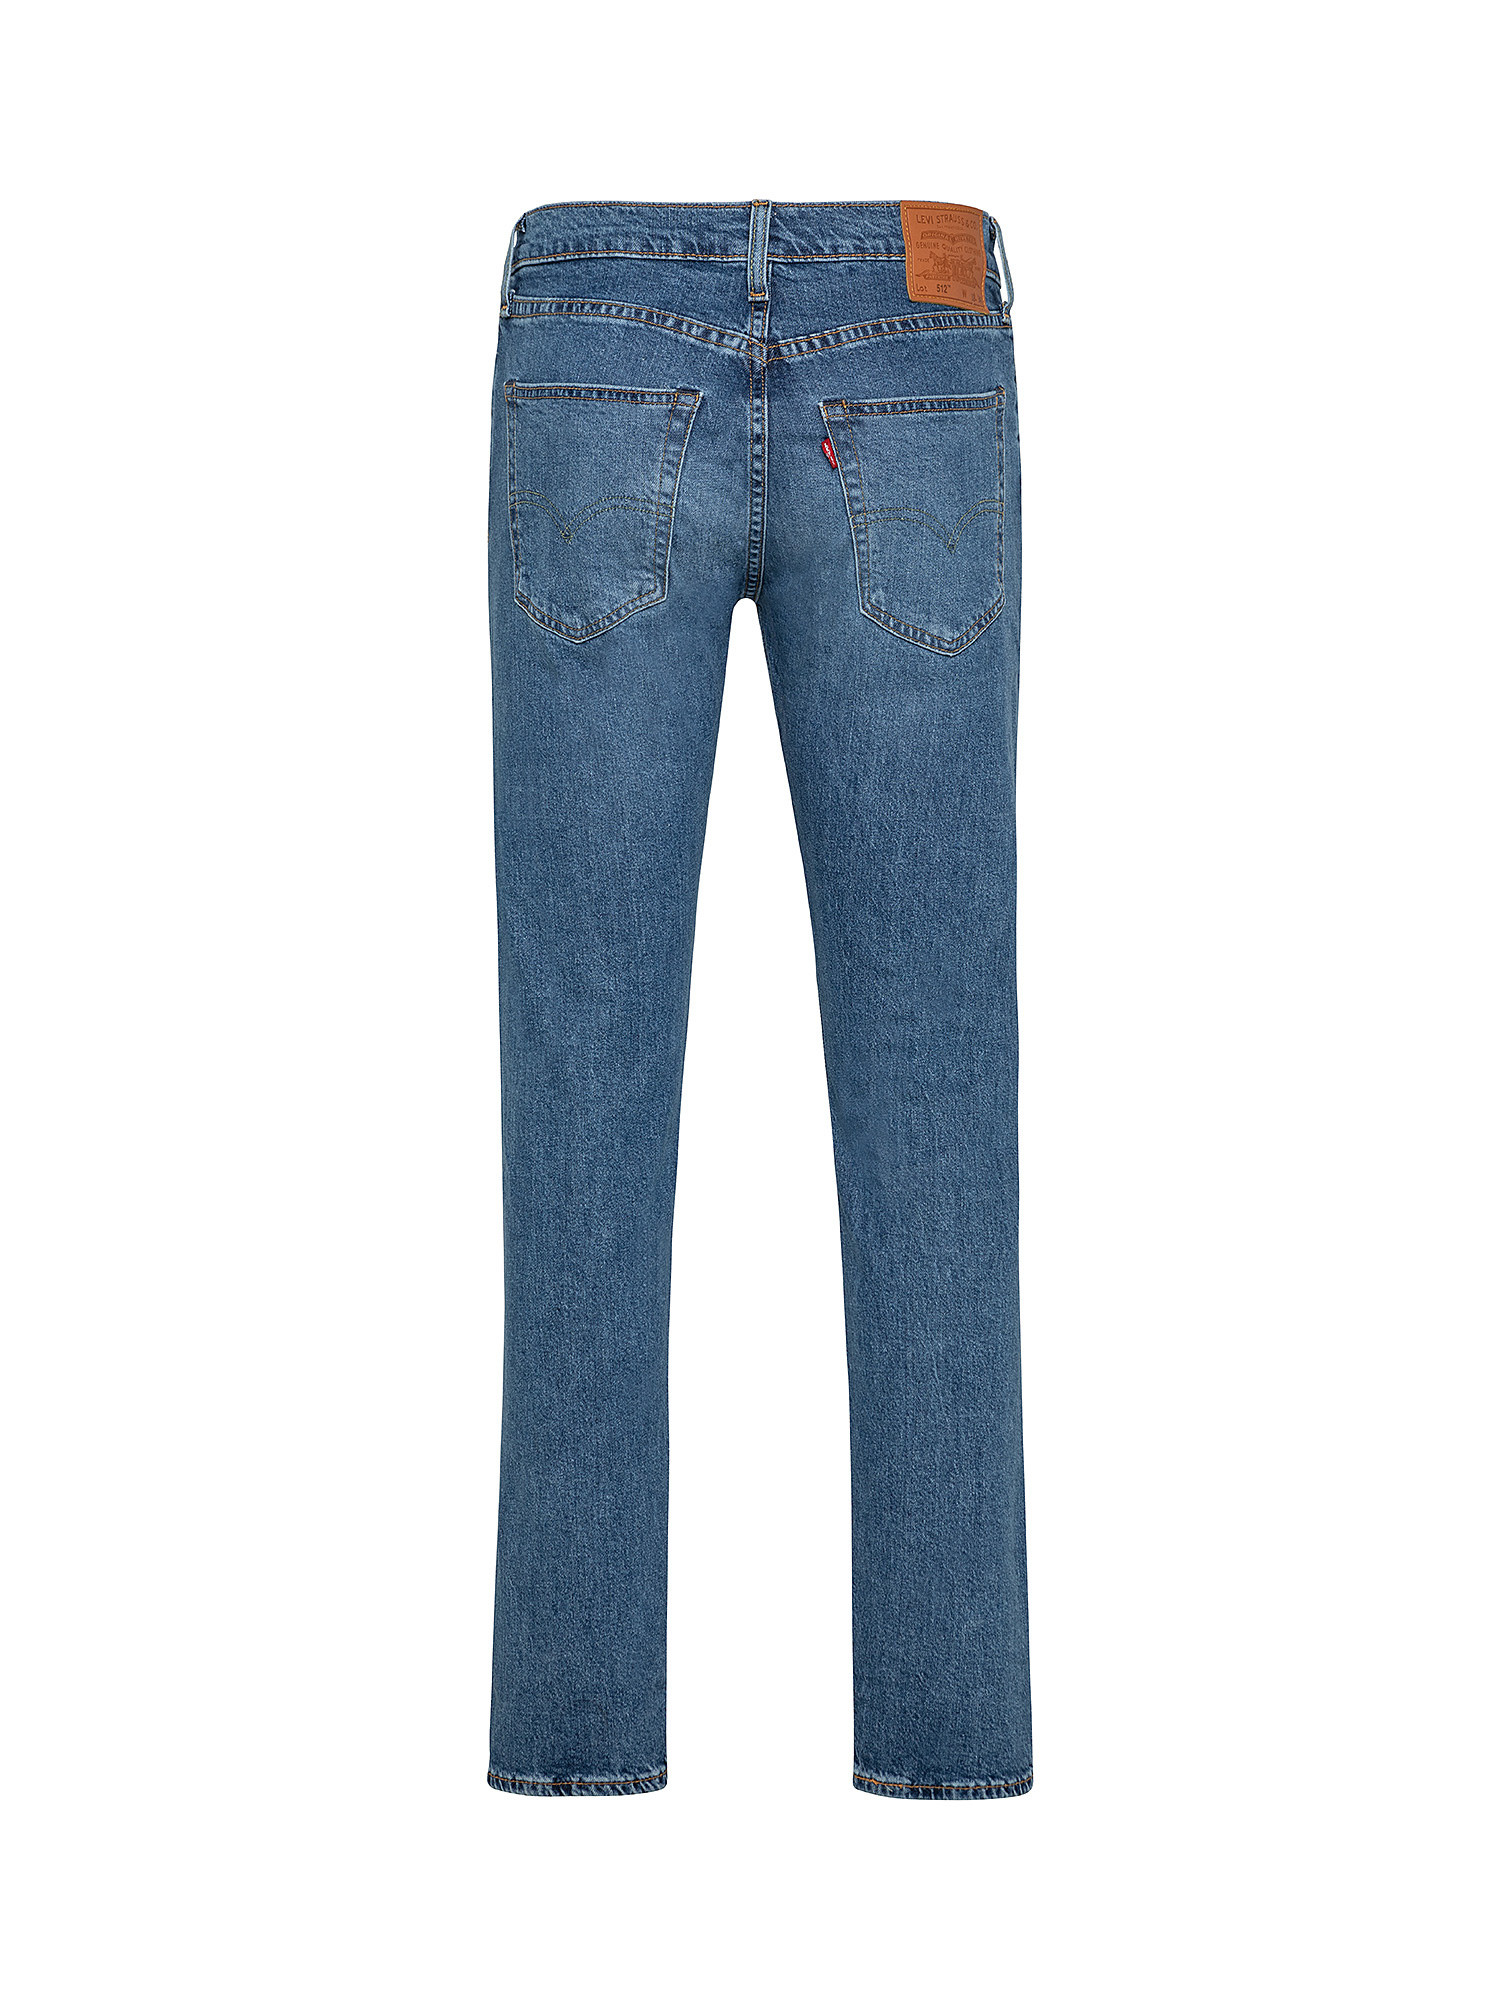 551Z Straight crop jeans, Blue, large image number 1